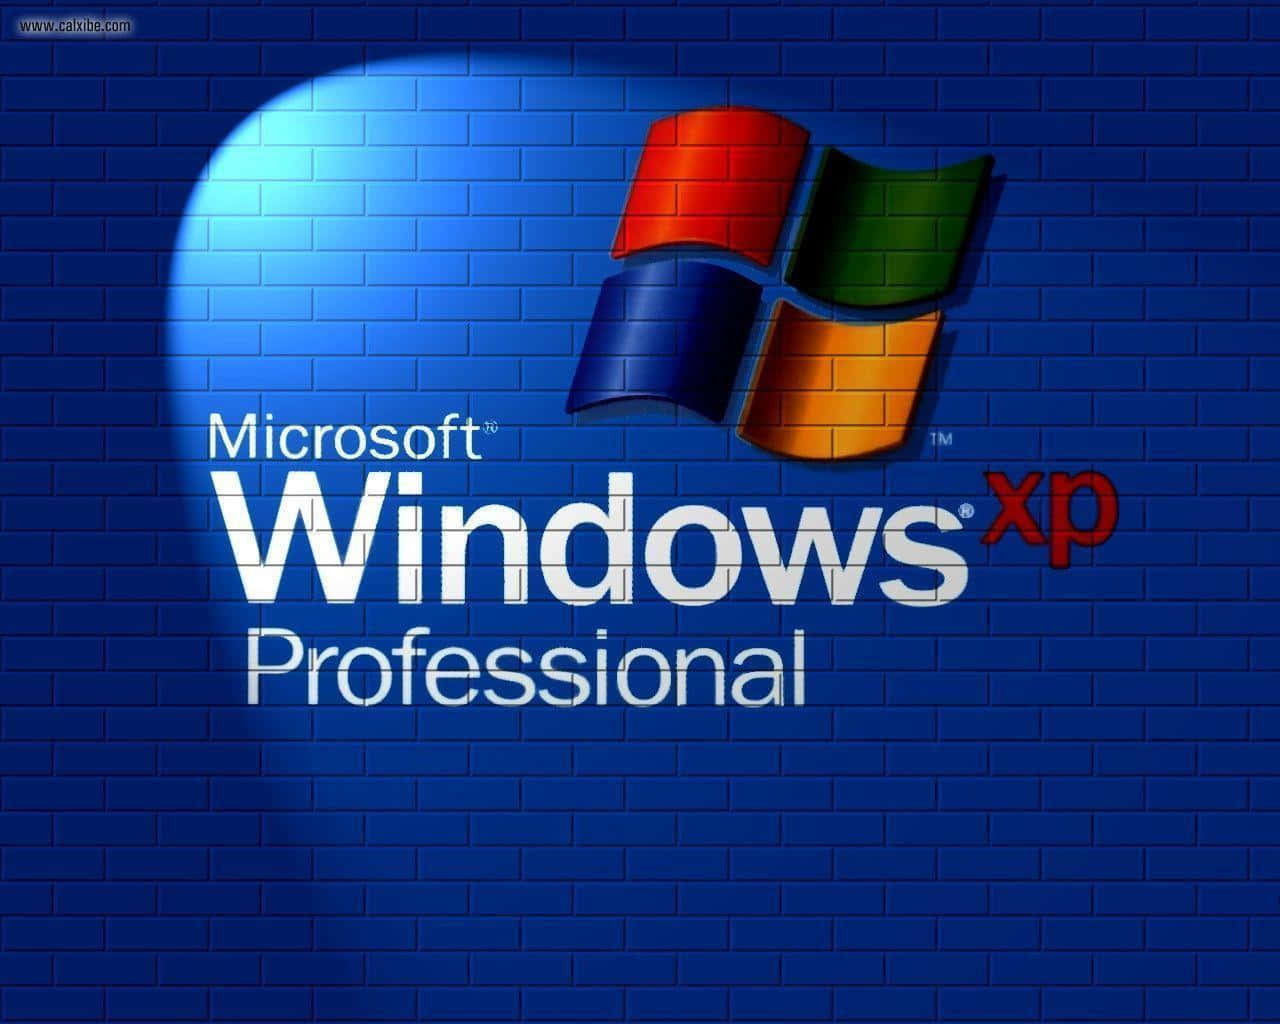 microsoft windows xp professional wallpapers